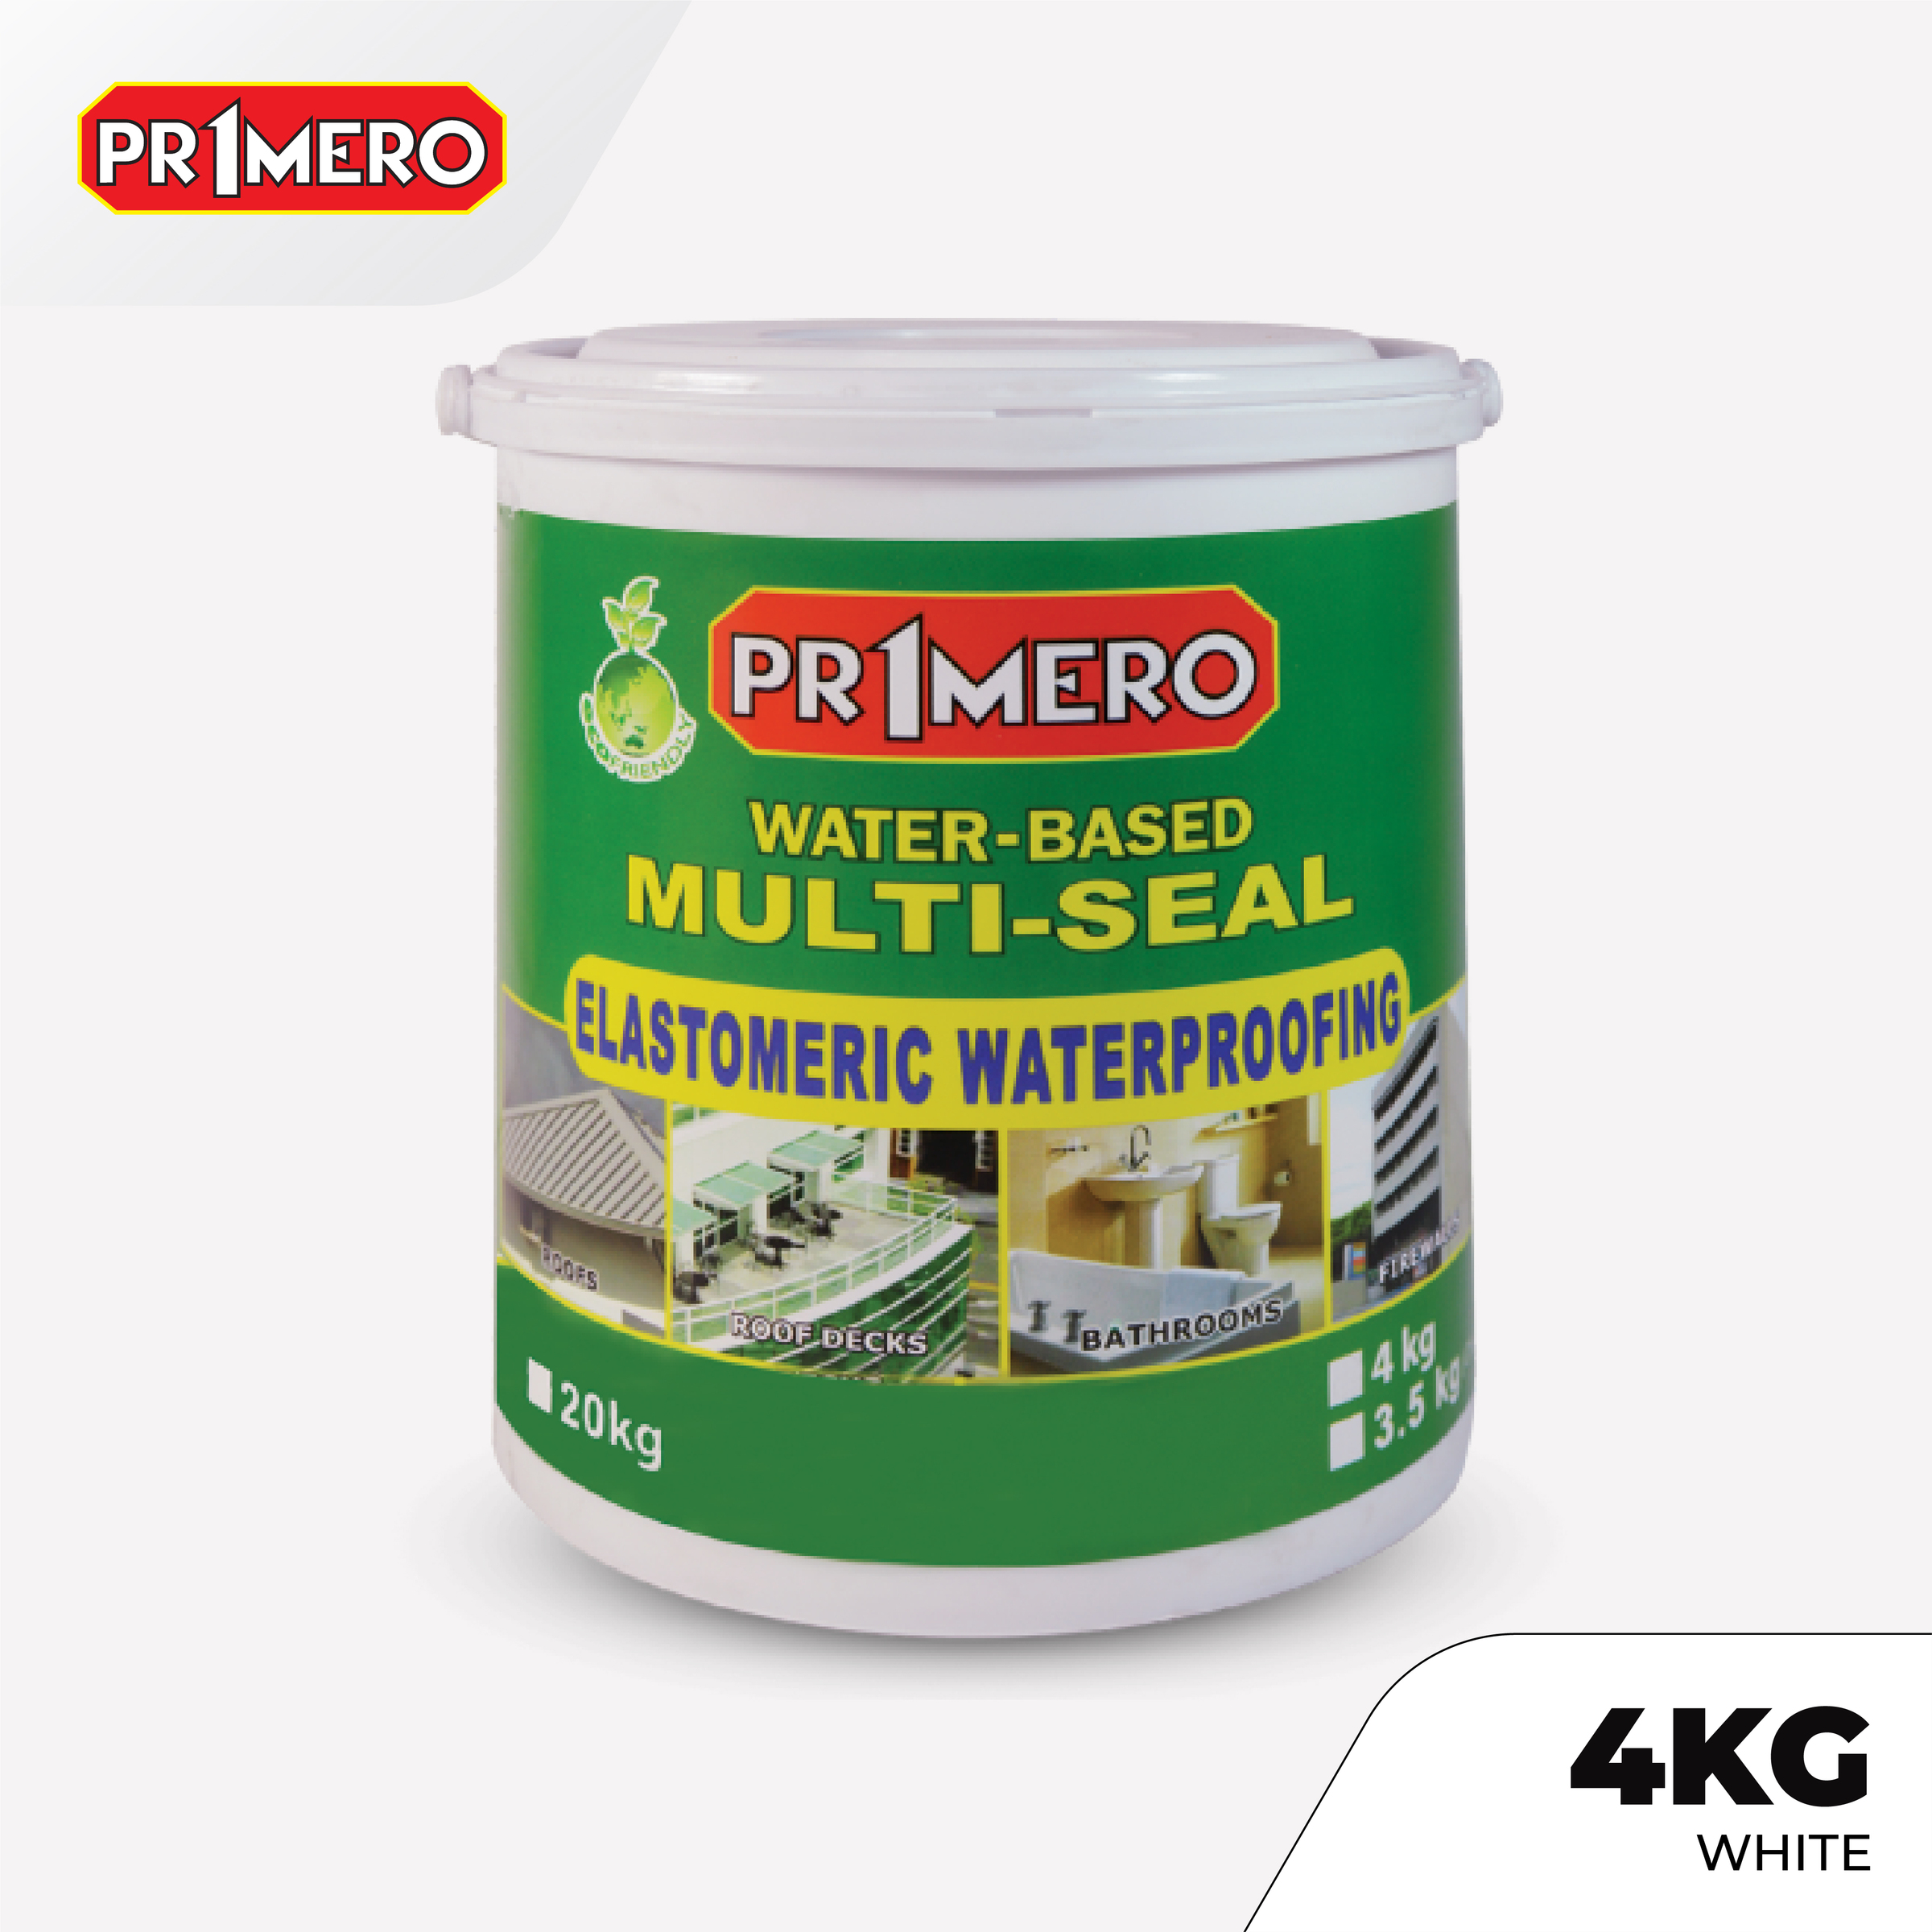 Primero Multi-Seal Elastomeric Waterproofing Sealant White - 4Kg